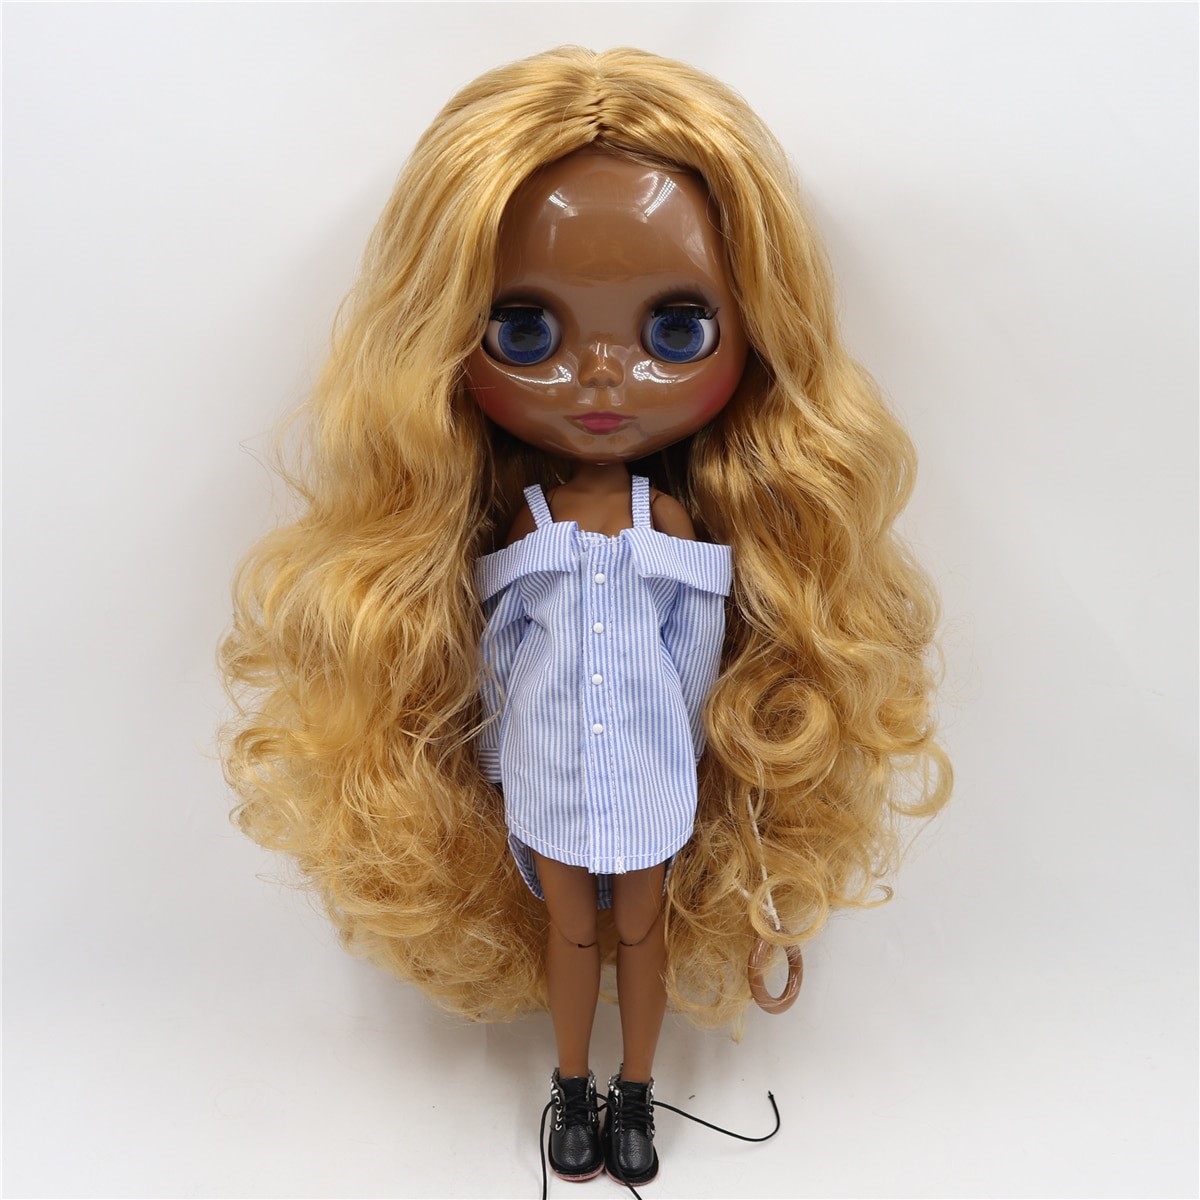 Neo Blythe Doll with Pink Hair, Black skin, Shiny Face & Jointed Body Black Skin Factory Blythe Doll Pink Hair Factory Blythe Doll Shiny Face Factory Blythe Doll